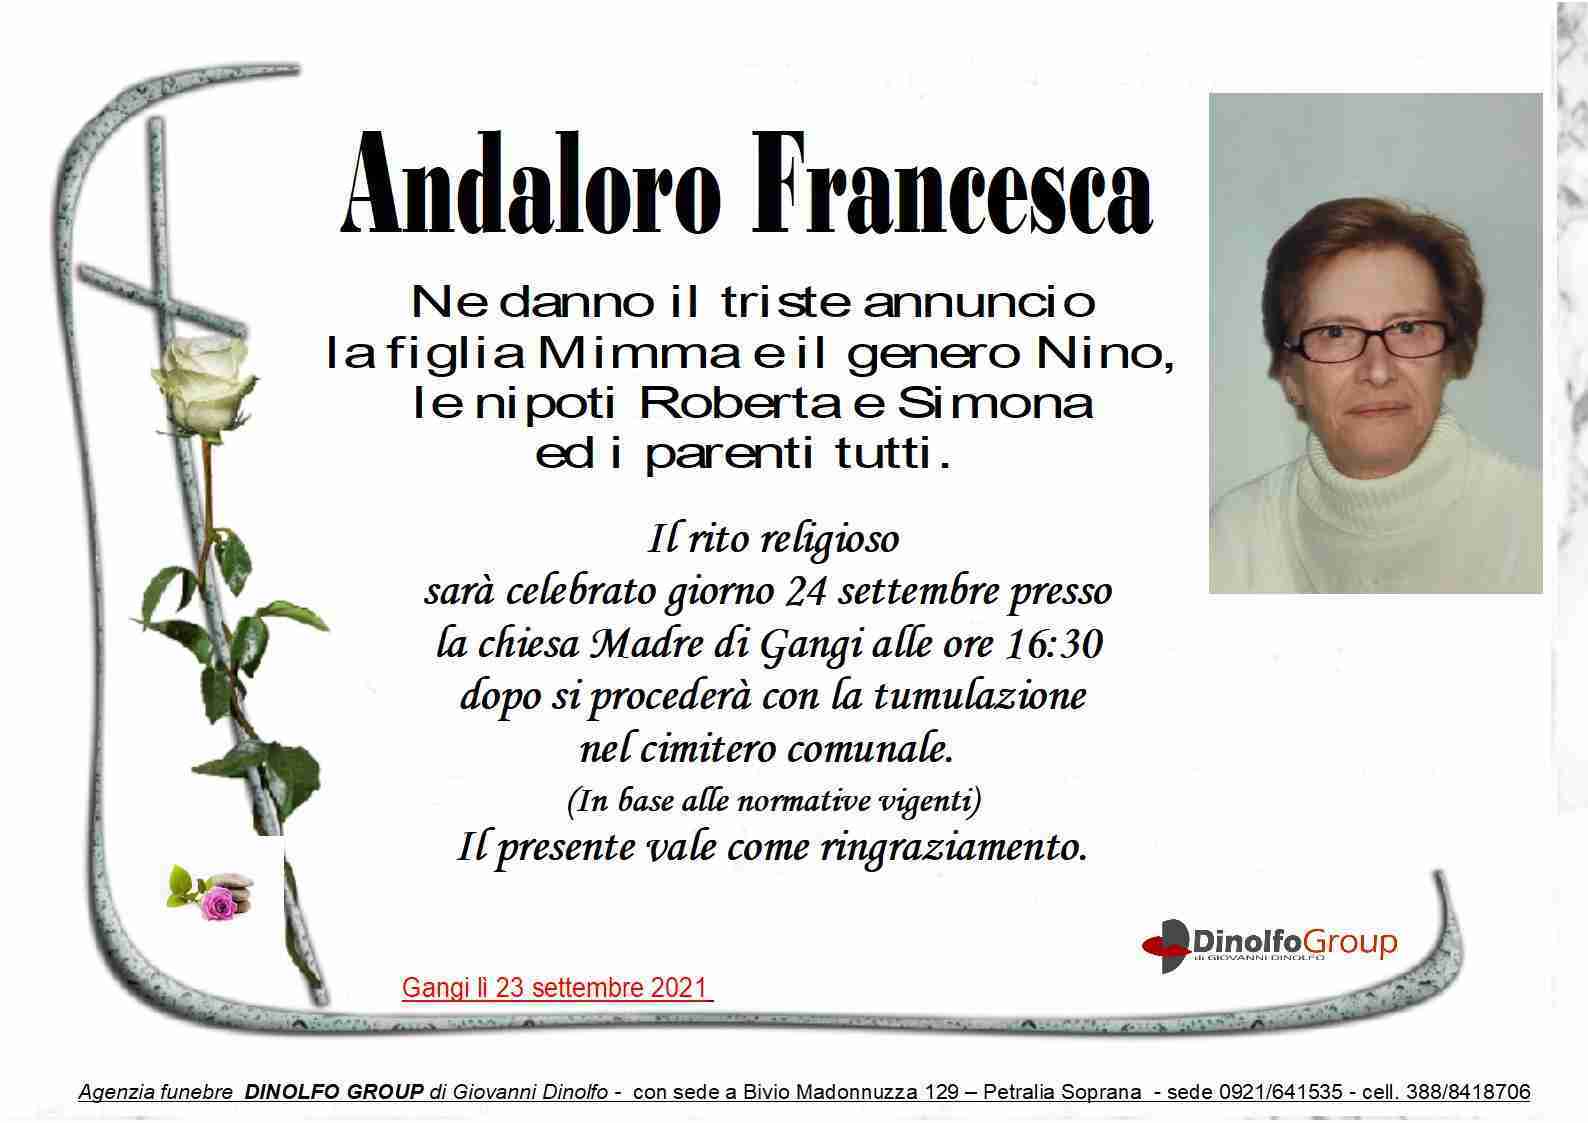 Francesca Andaloro